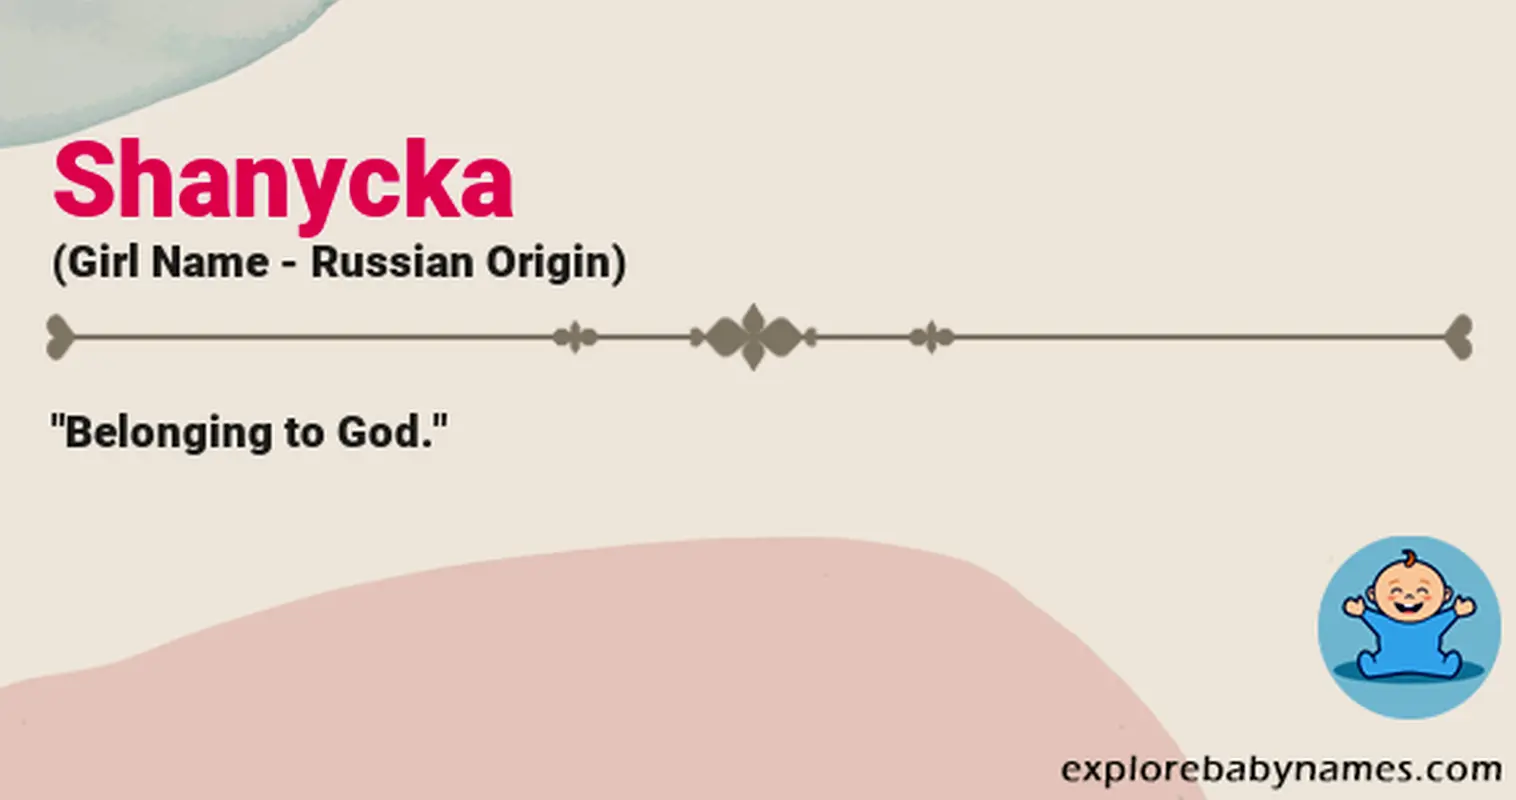 Meaning of Shanycka